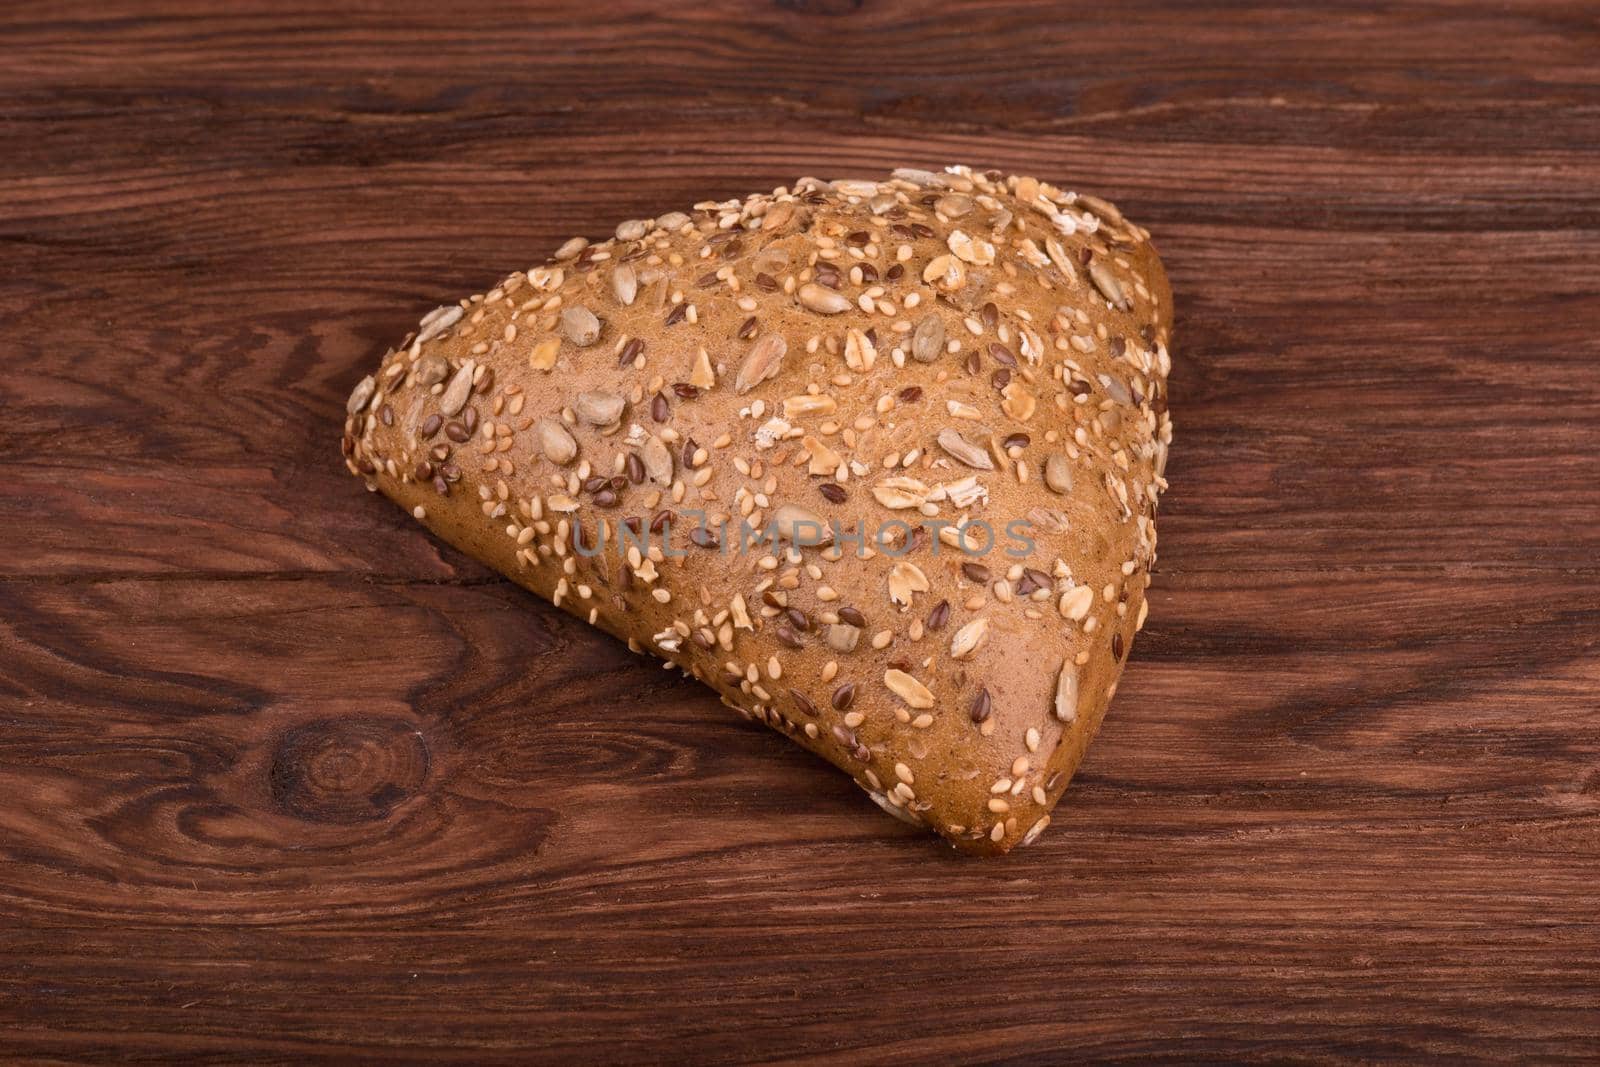 Triangular bun with different grains on a brown wooden background